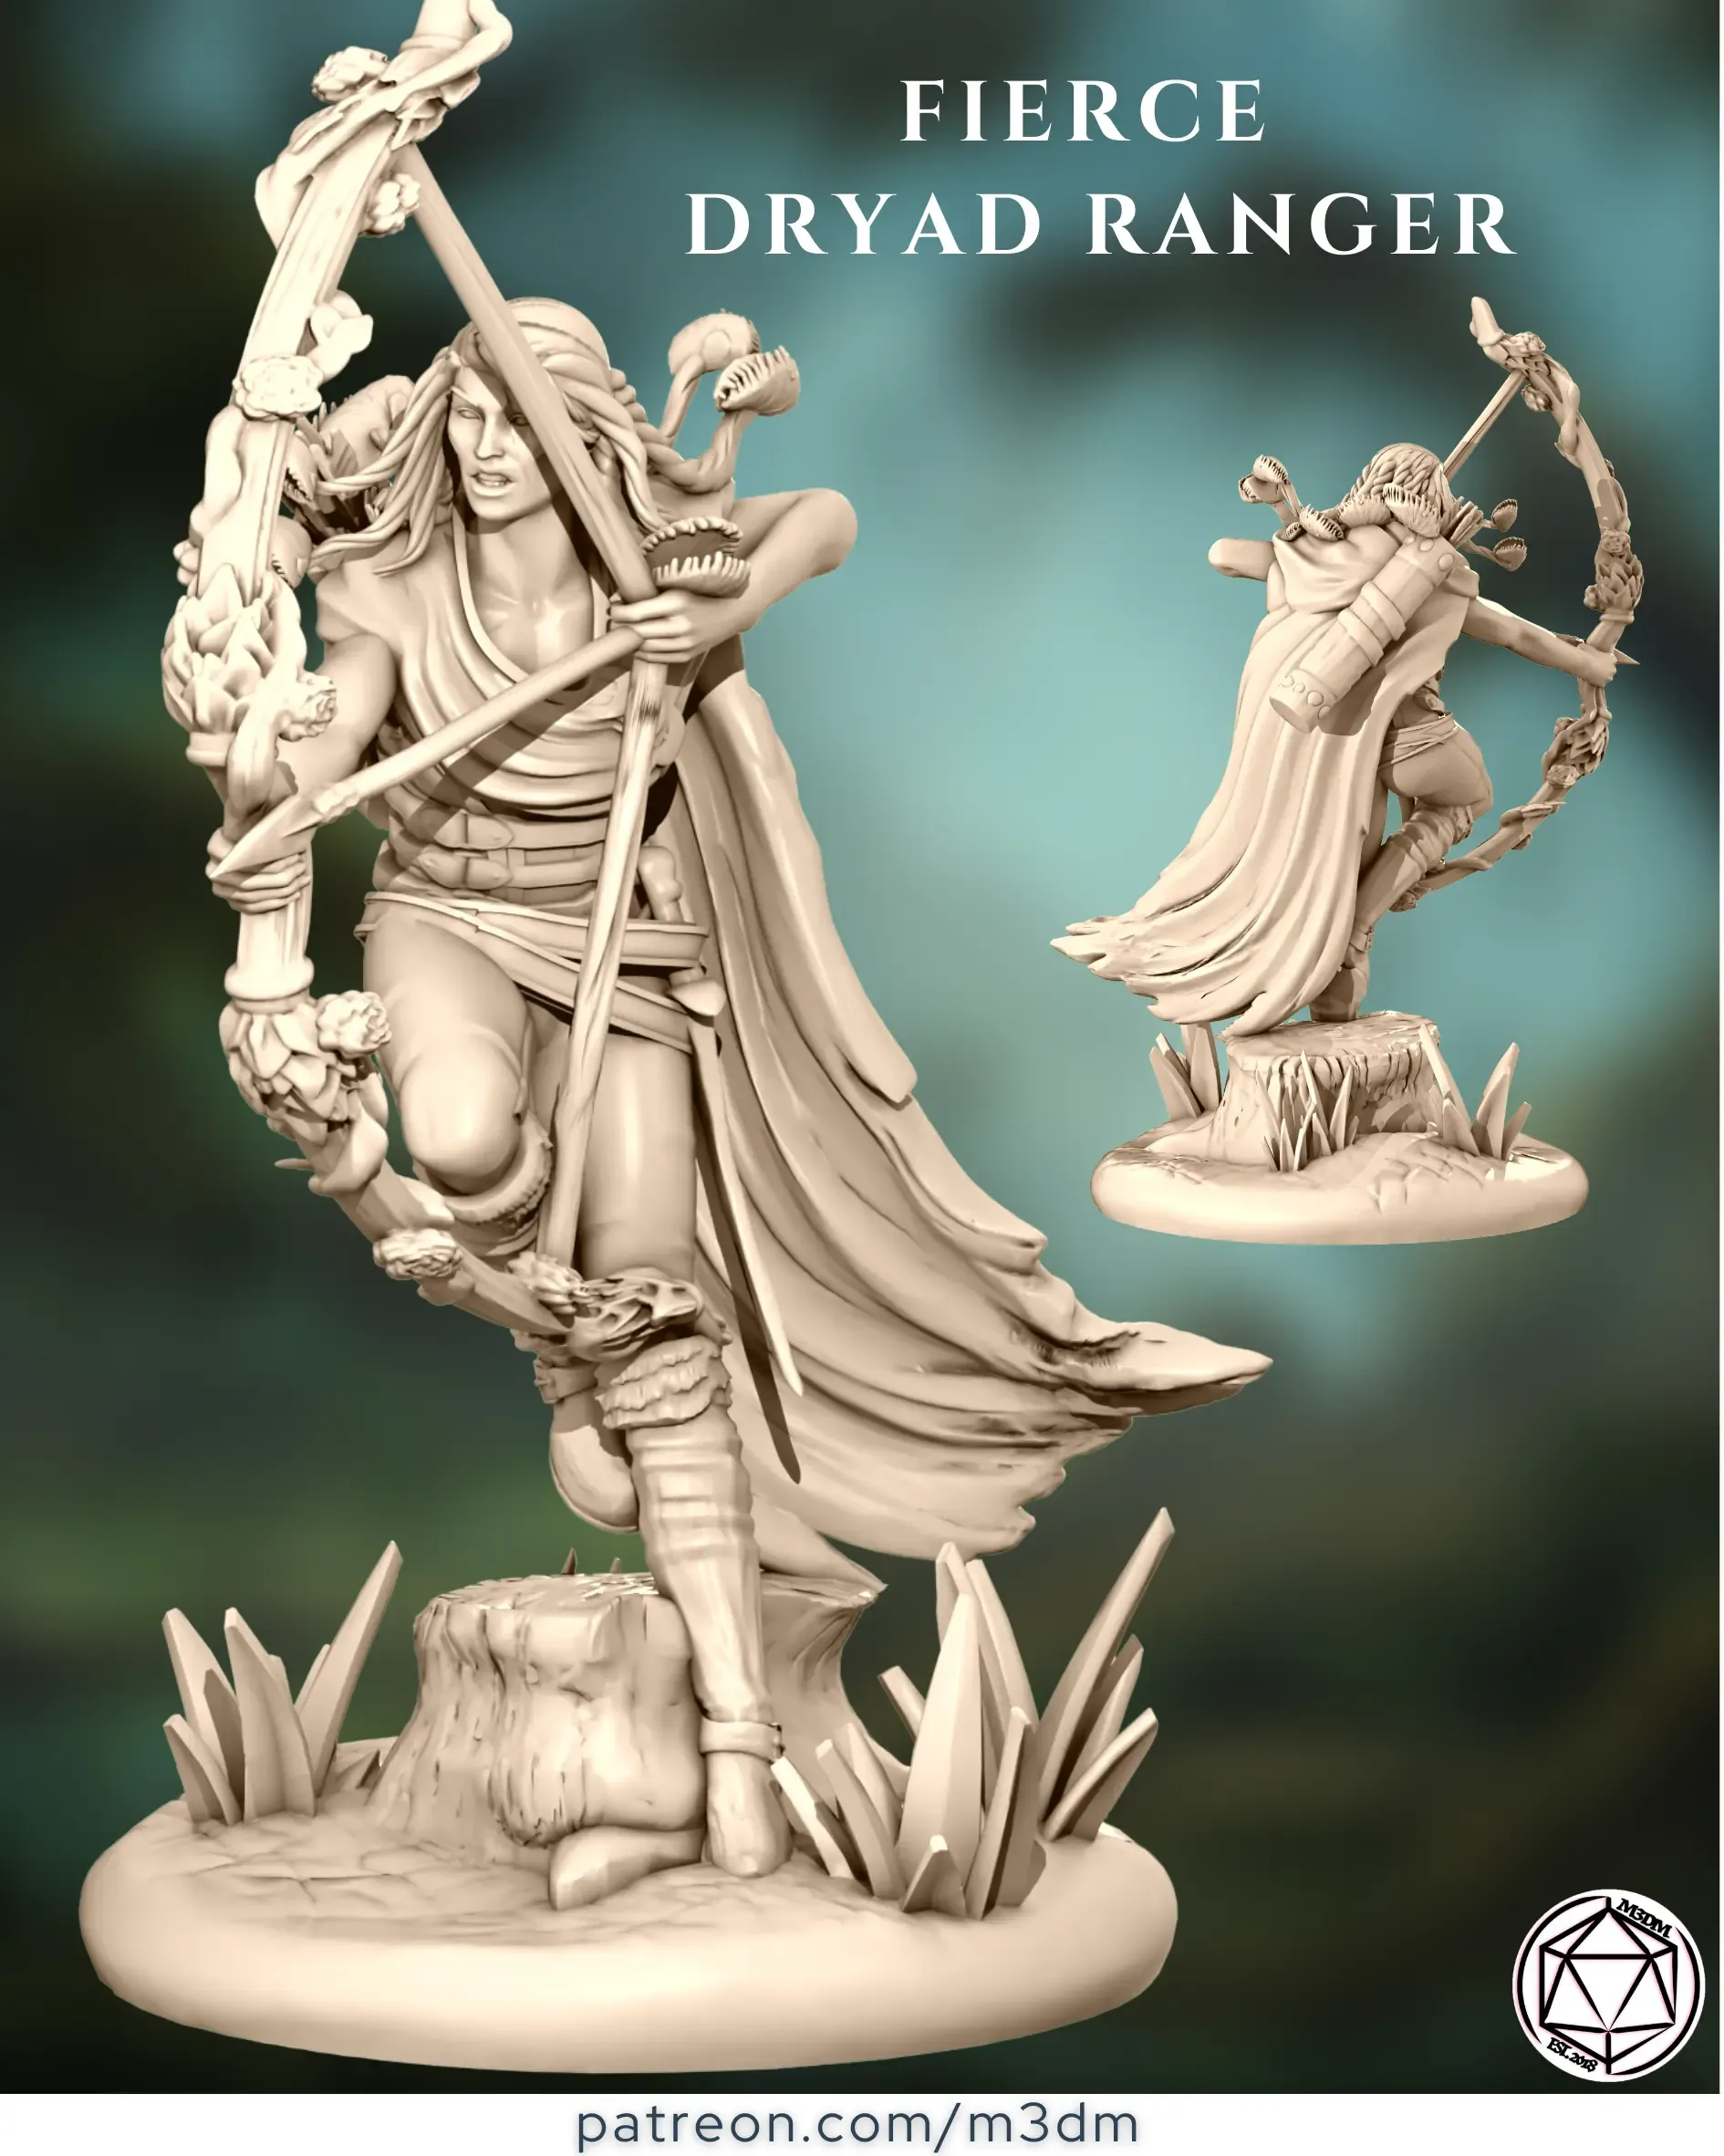 Fierce Dryad Ranger